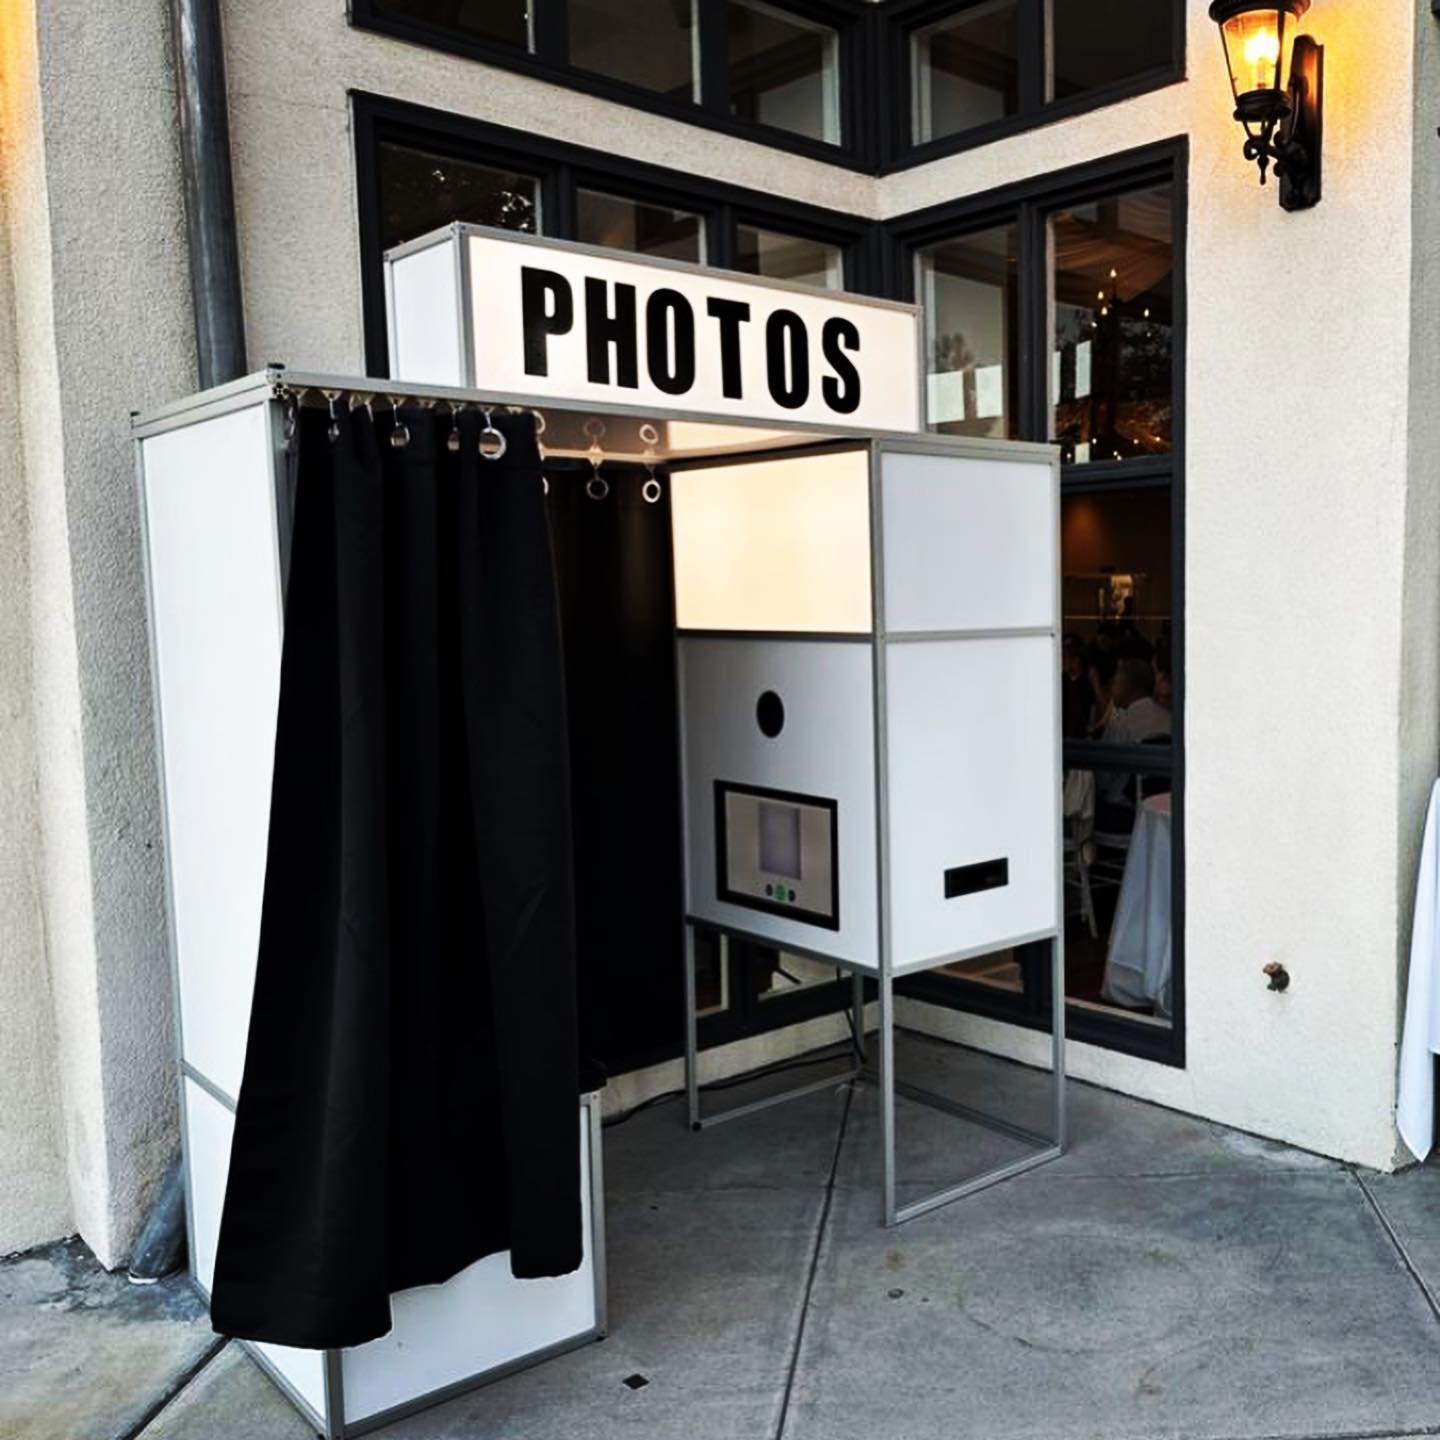 New Photo Booth ! 

#lbphotobooth #photobooth #photos #weddings #love #events #props #lbc #longbeach #parties #fun #lbphotoboothco
#photos #photo #prints #instagood #smile